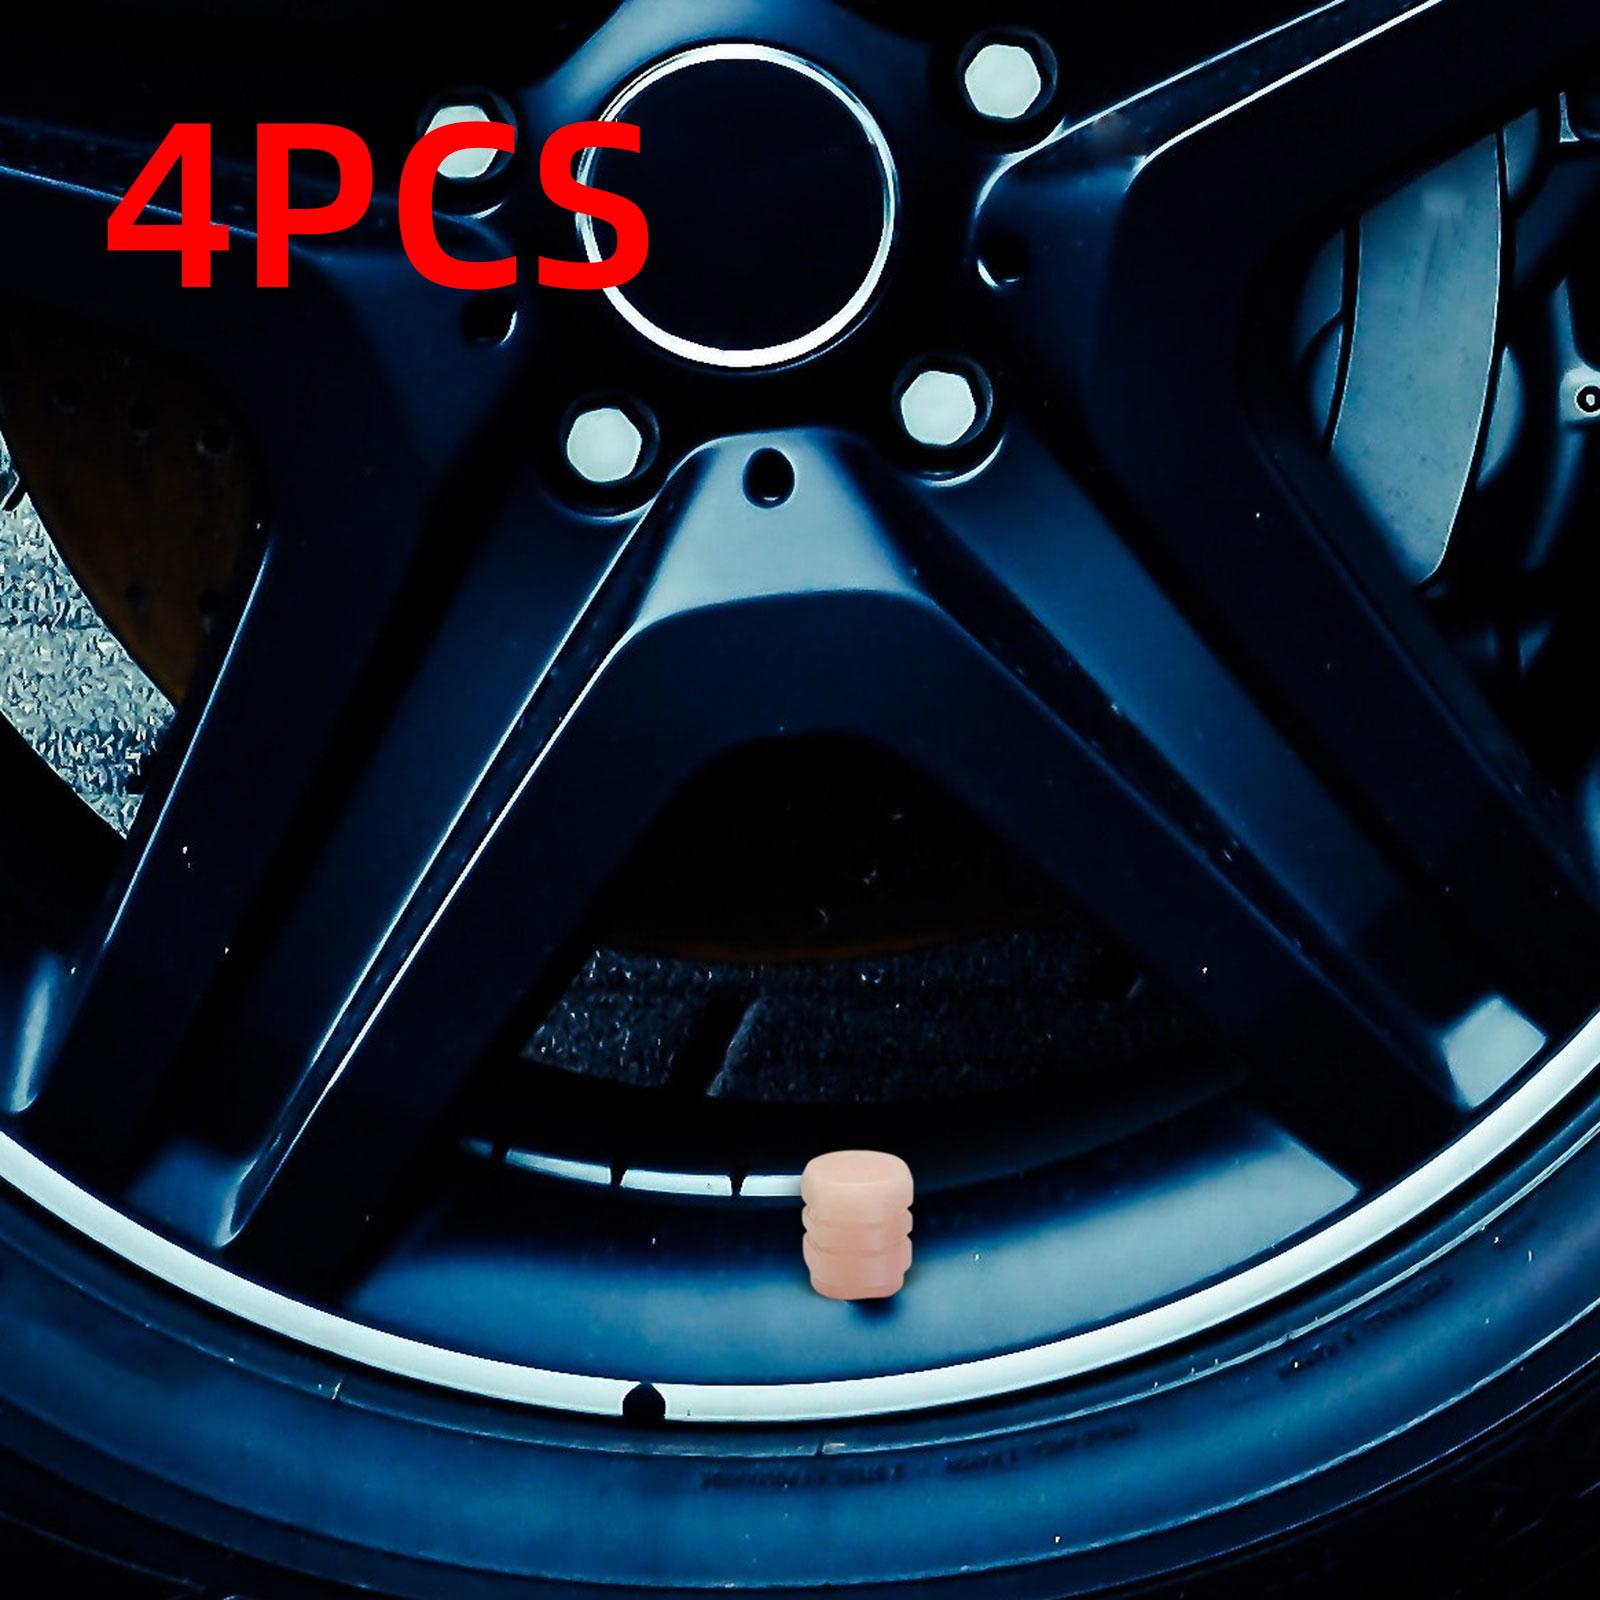 4Pcs Fluorescent Tire Valve Caps Car Tire Stem Caps for SUV Motorcycles Red